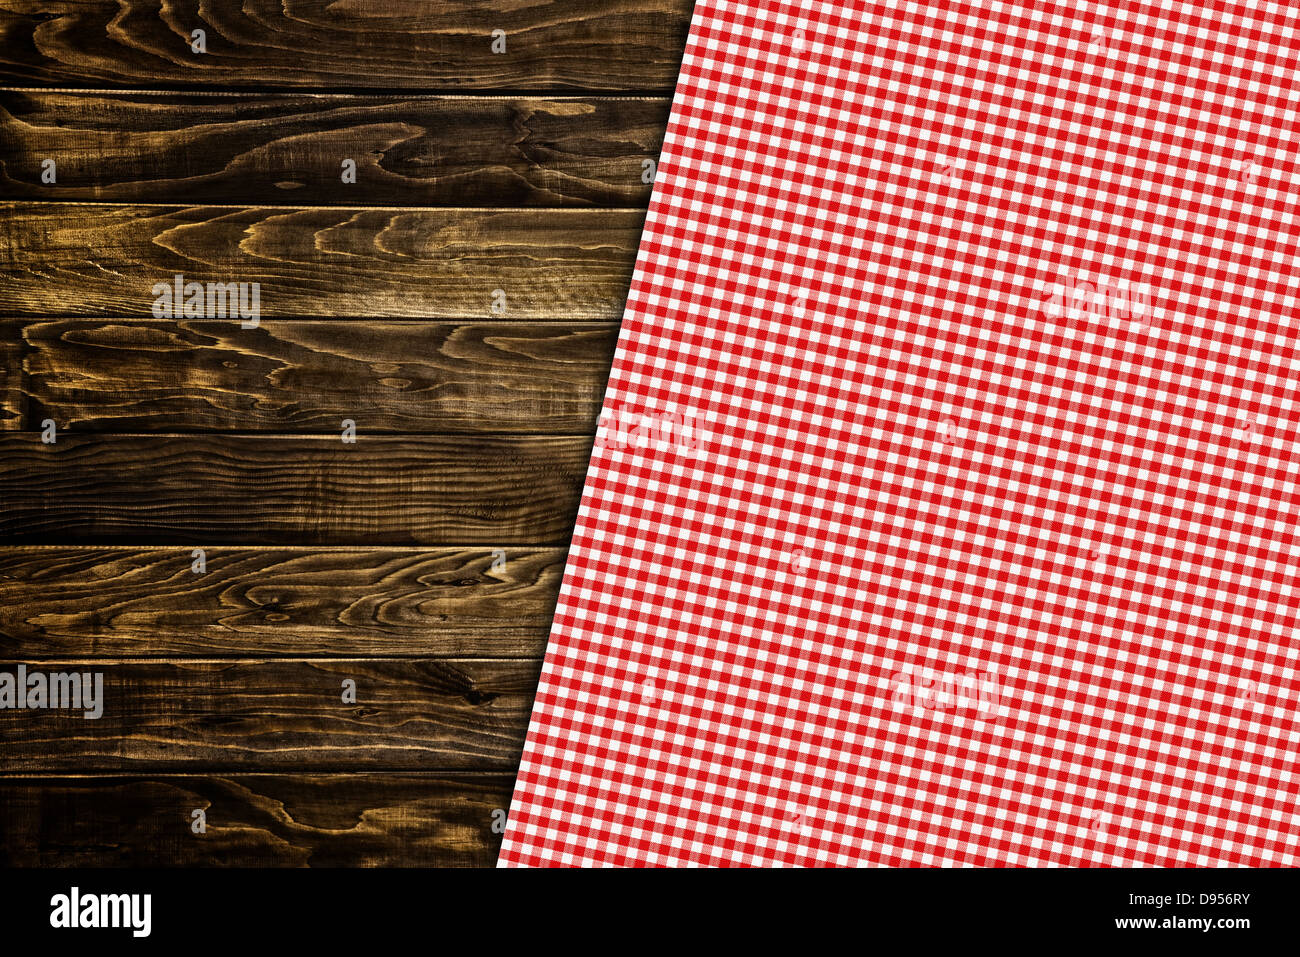 Table kitchen napkin on wooden background. Stock Photo